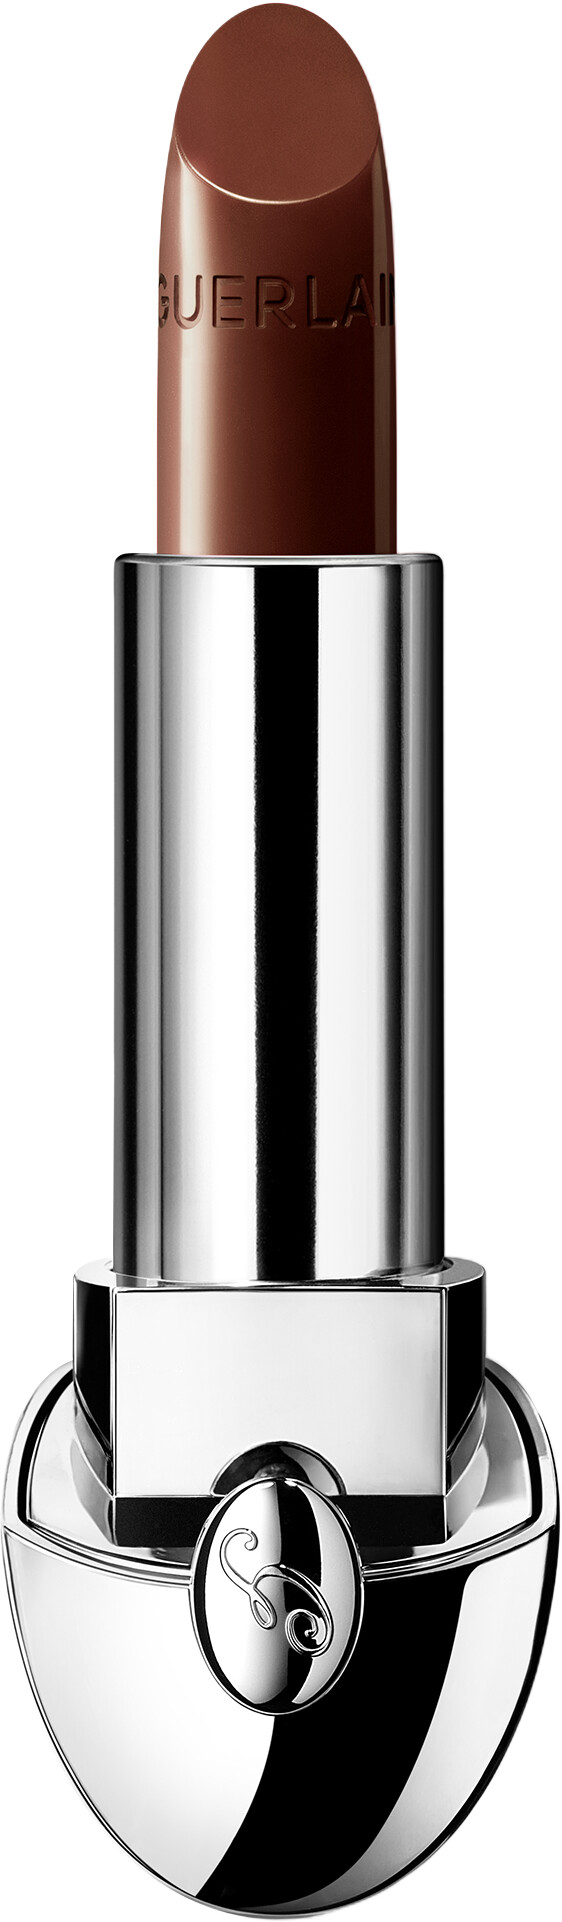 GUERLAIN Rouge G Lipstick Refill 3.5g - Nude Collection 3.5g 19 - Deep Brown